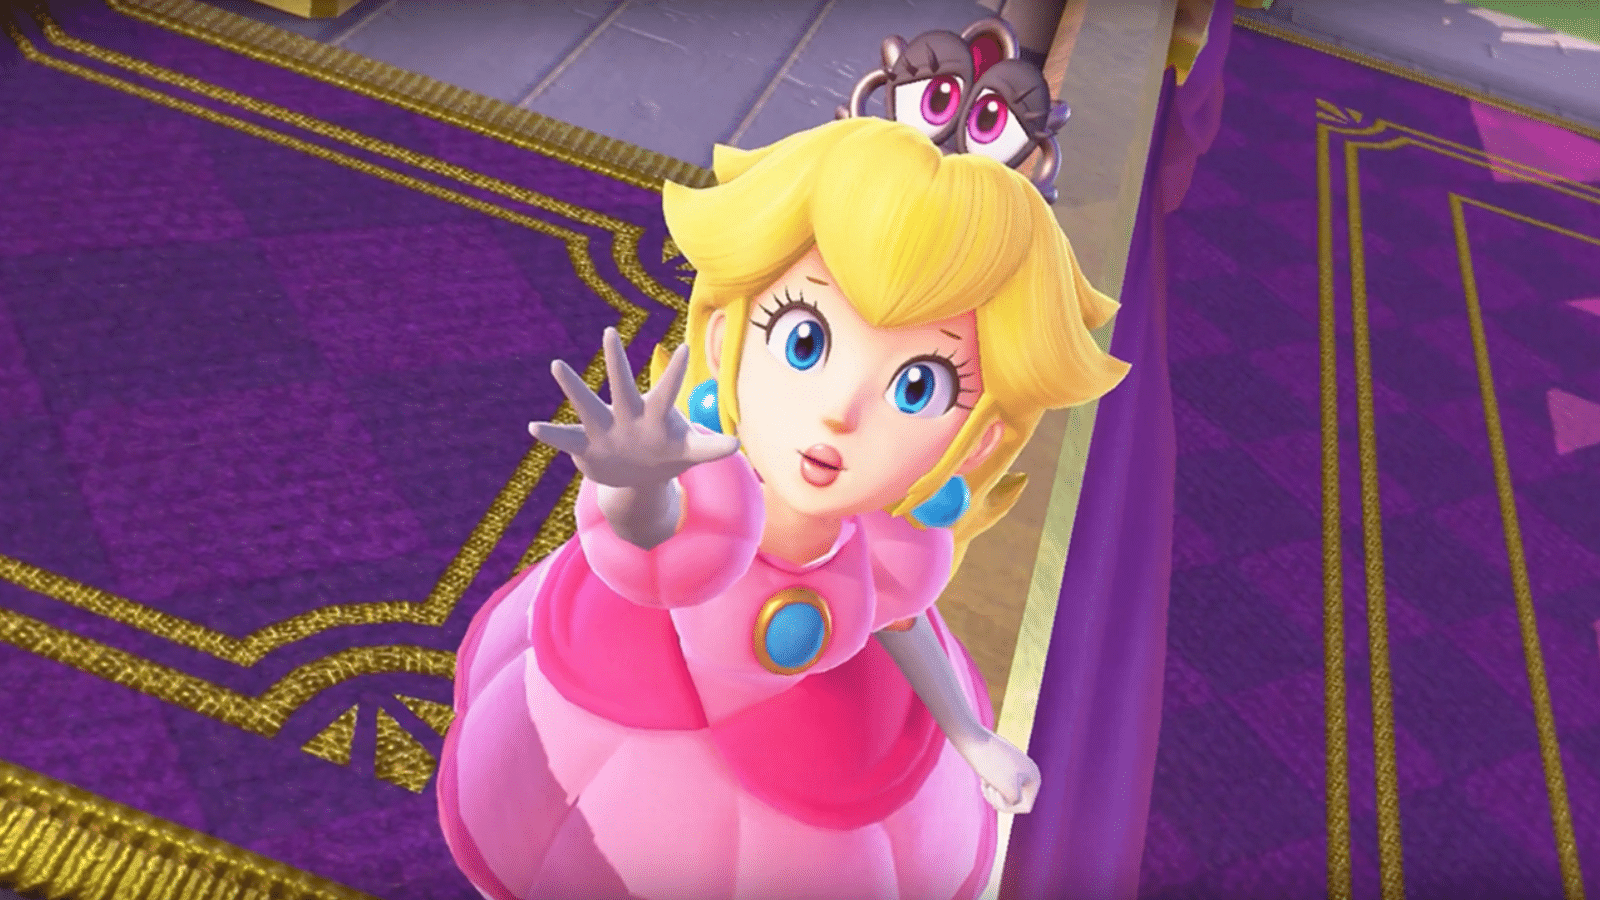 New Super Mario Bros Movie Posters Reveal Princess Peachs New Look